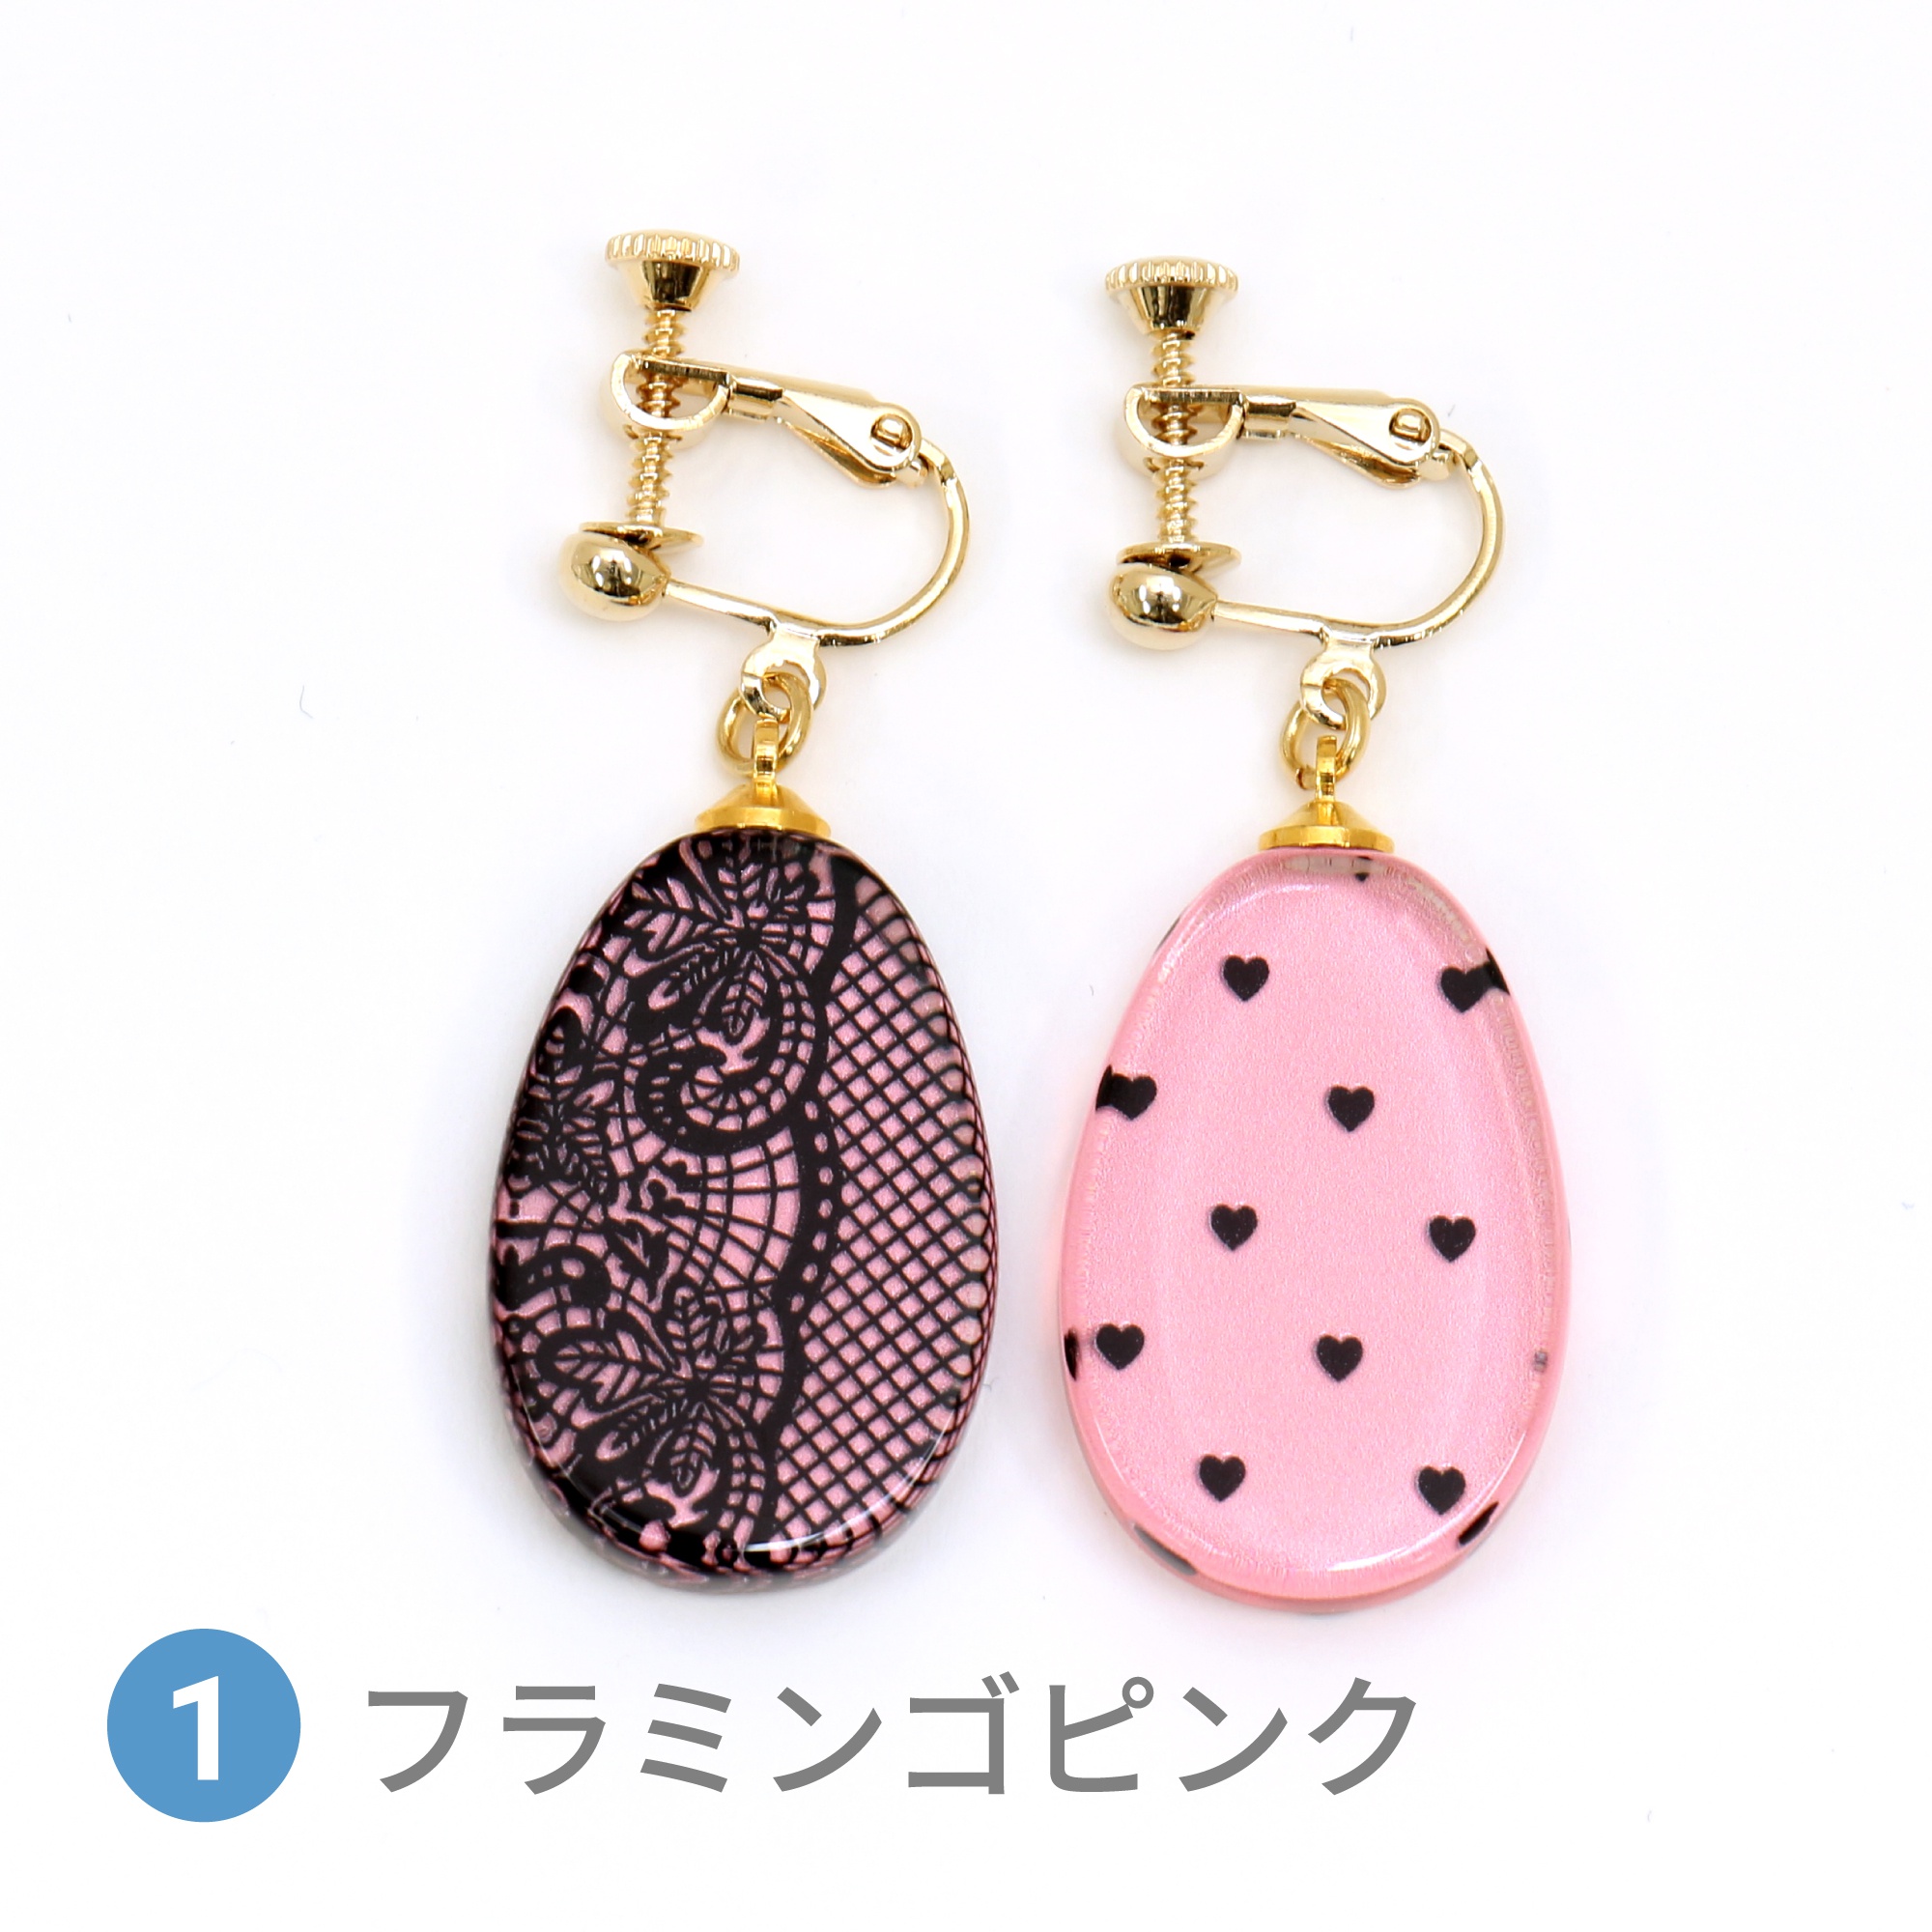 Glass accessories Earring LACE&HEART flamingo pink drop shape